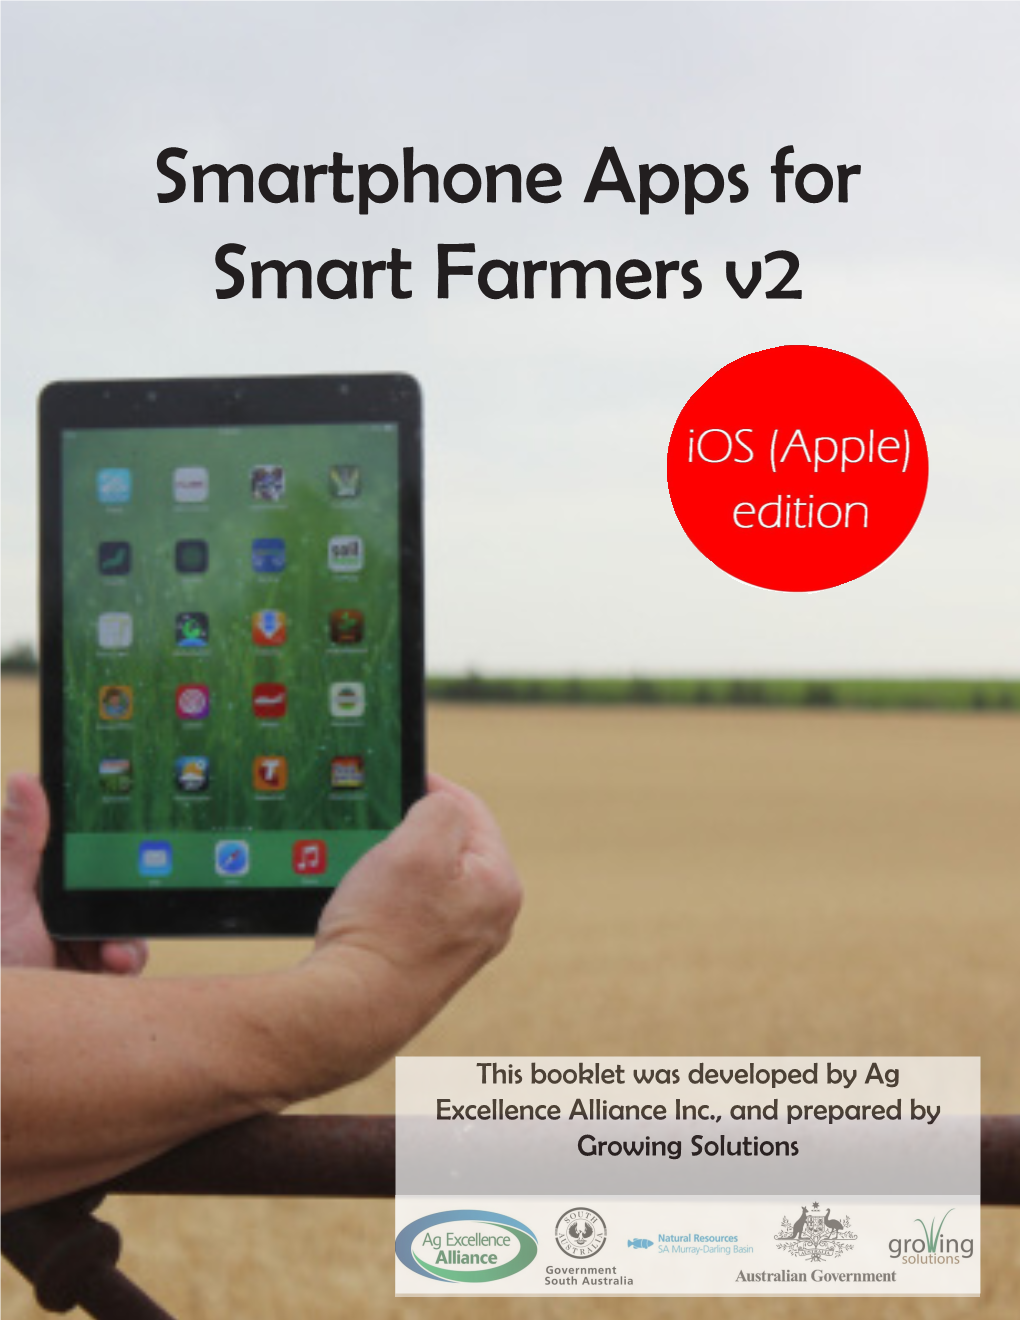 Smartphone Apps for Smart Farmers V2